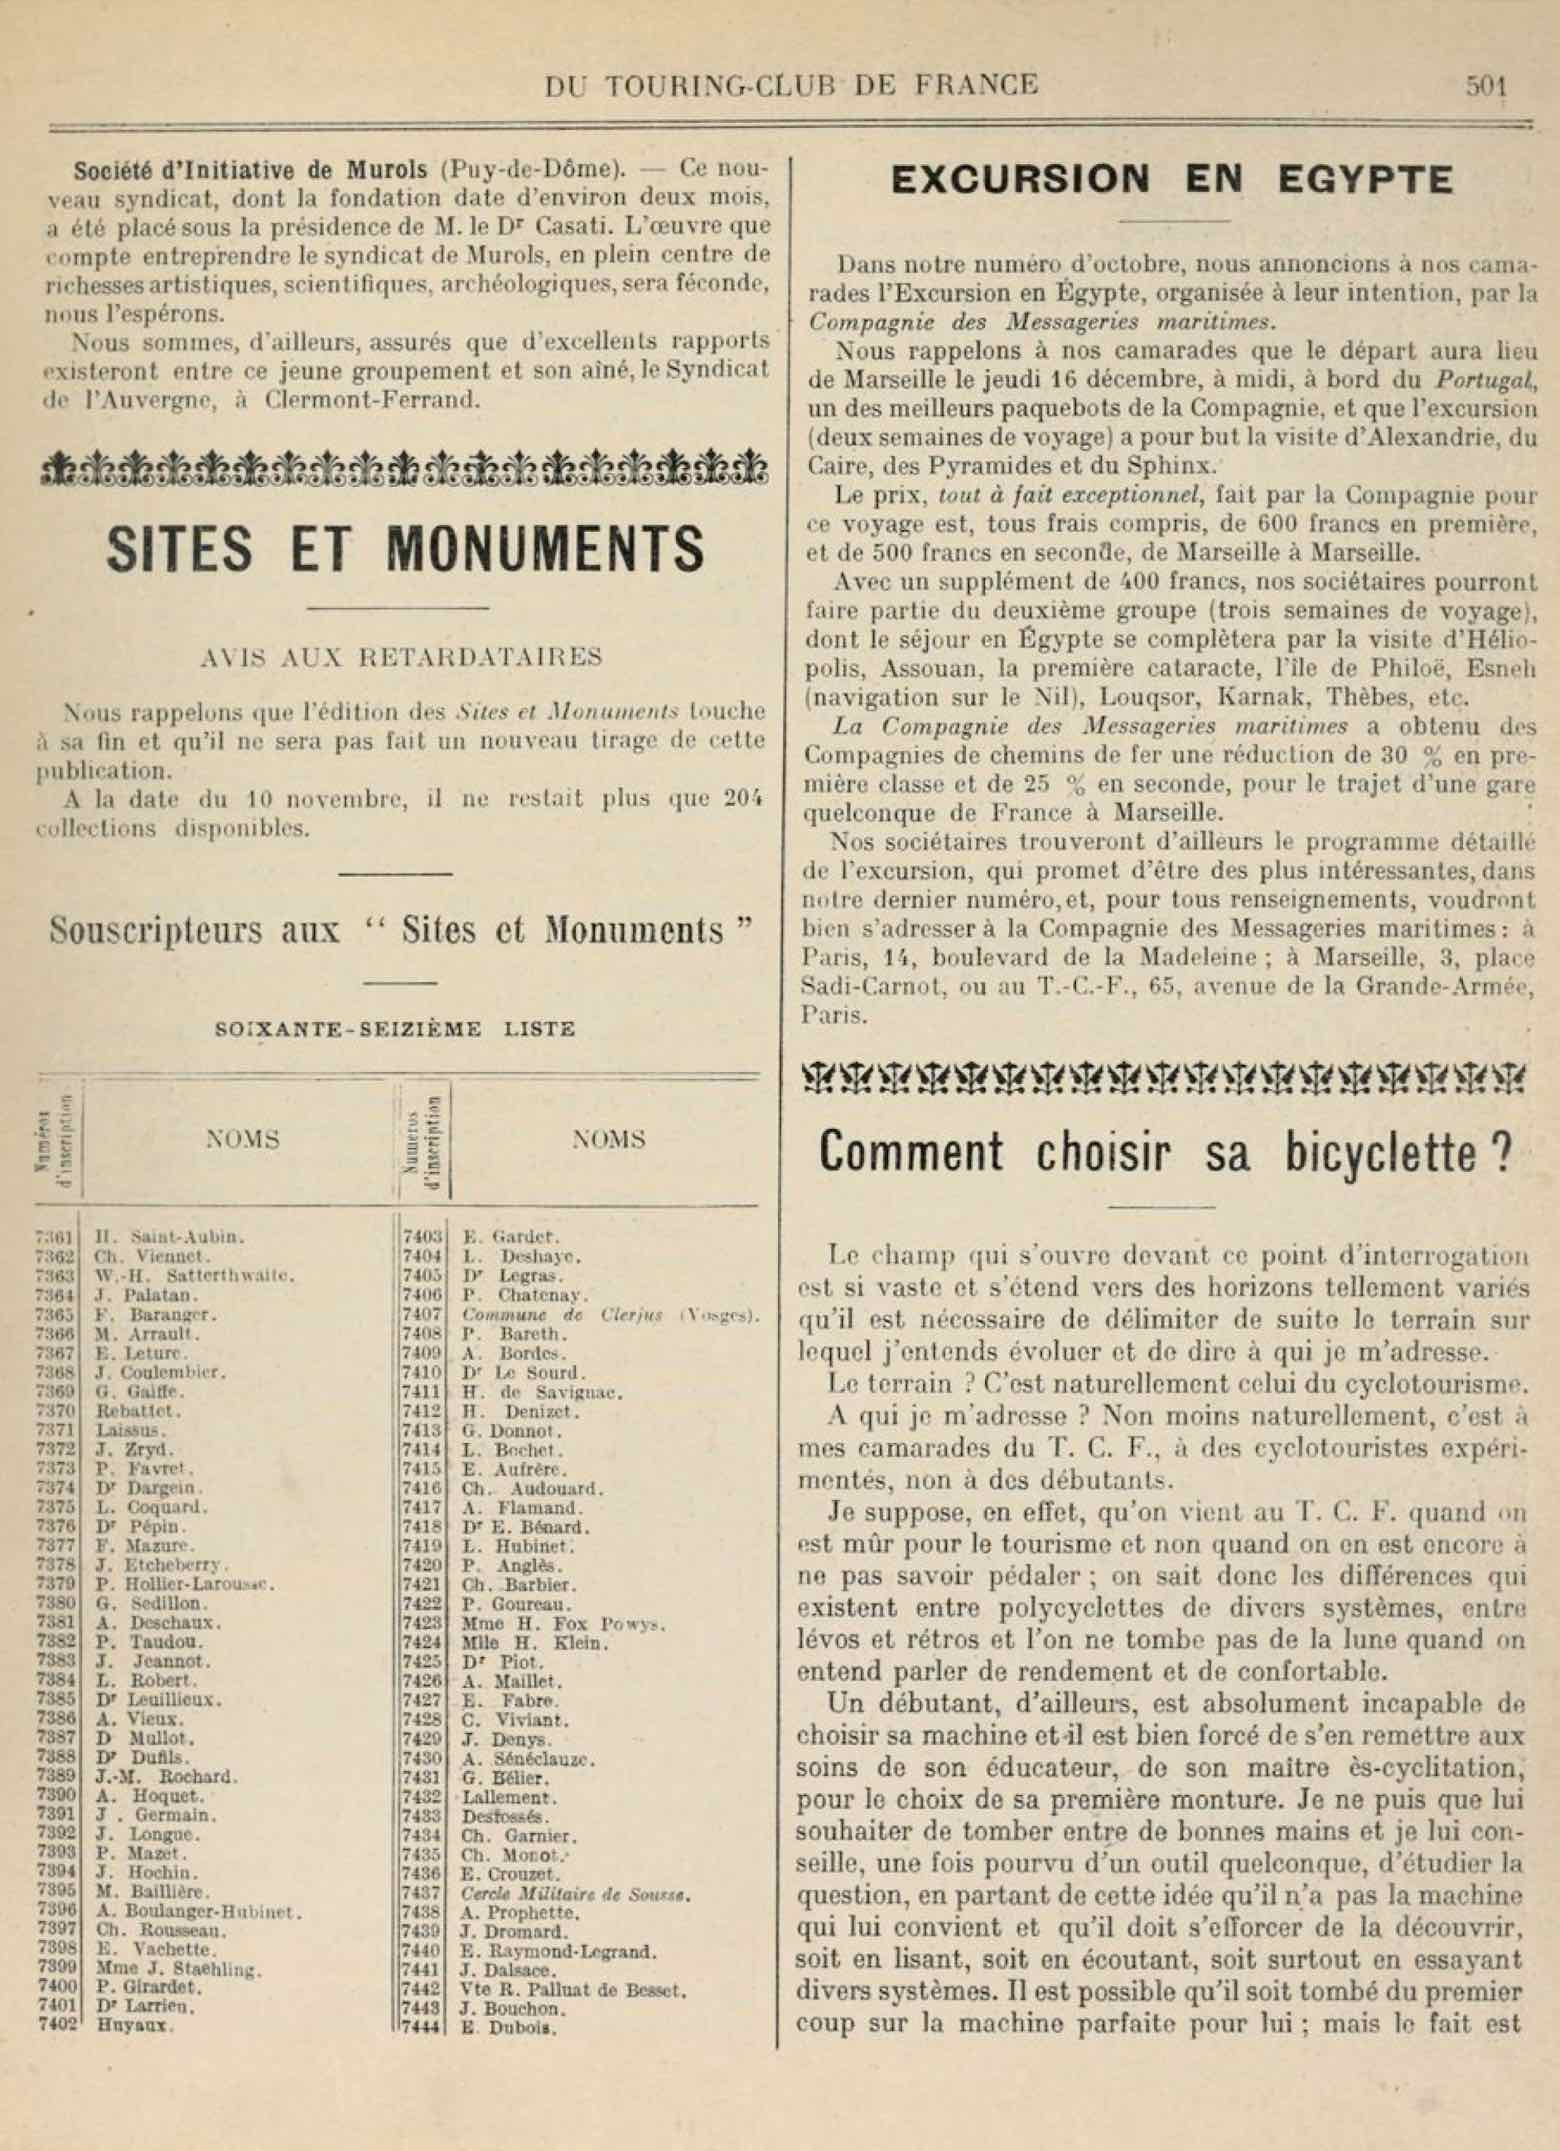 T.C.F. Revue Mensuelle November 1909 - Comment choisir sa bicyclette? (part I) scan 1 main image